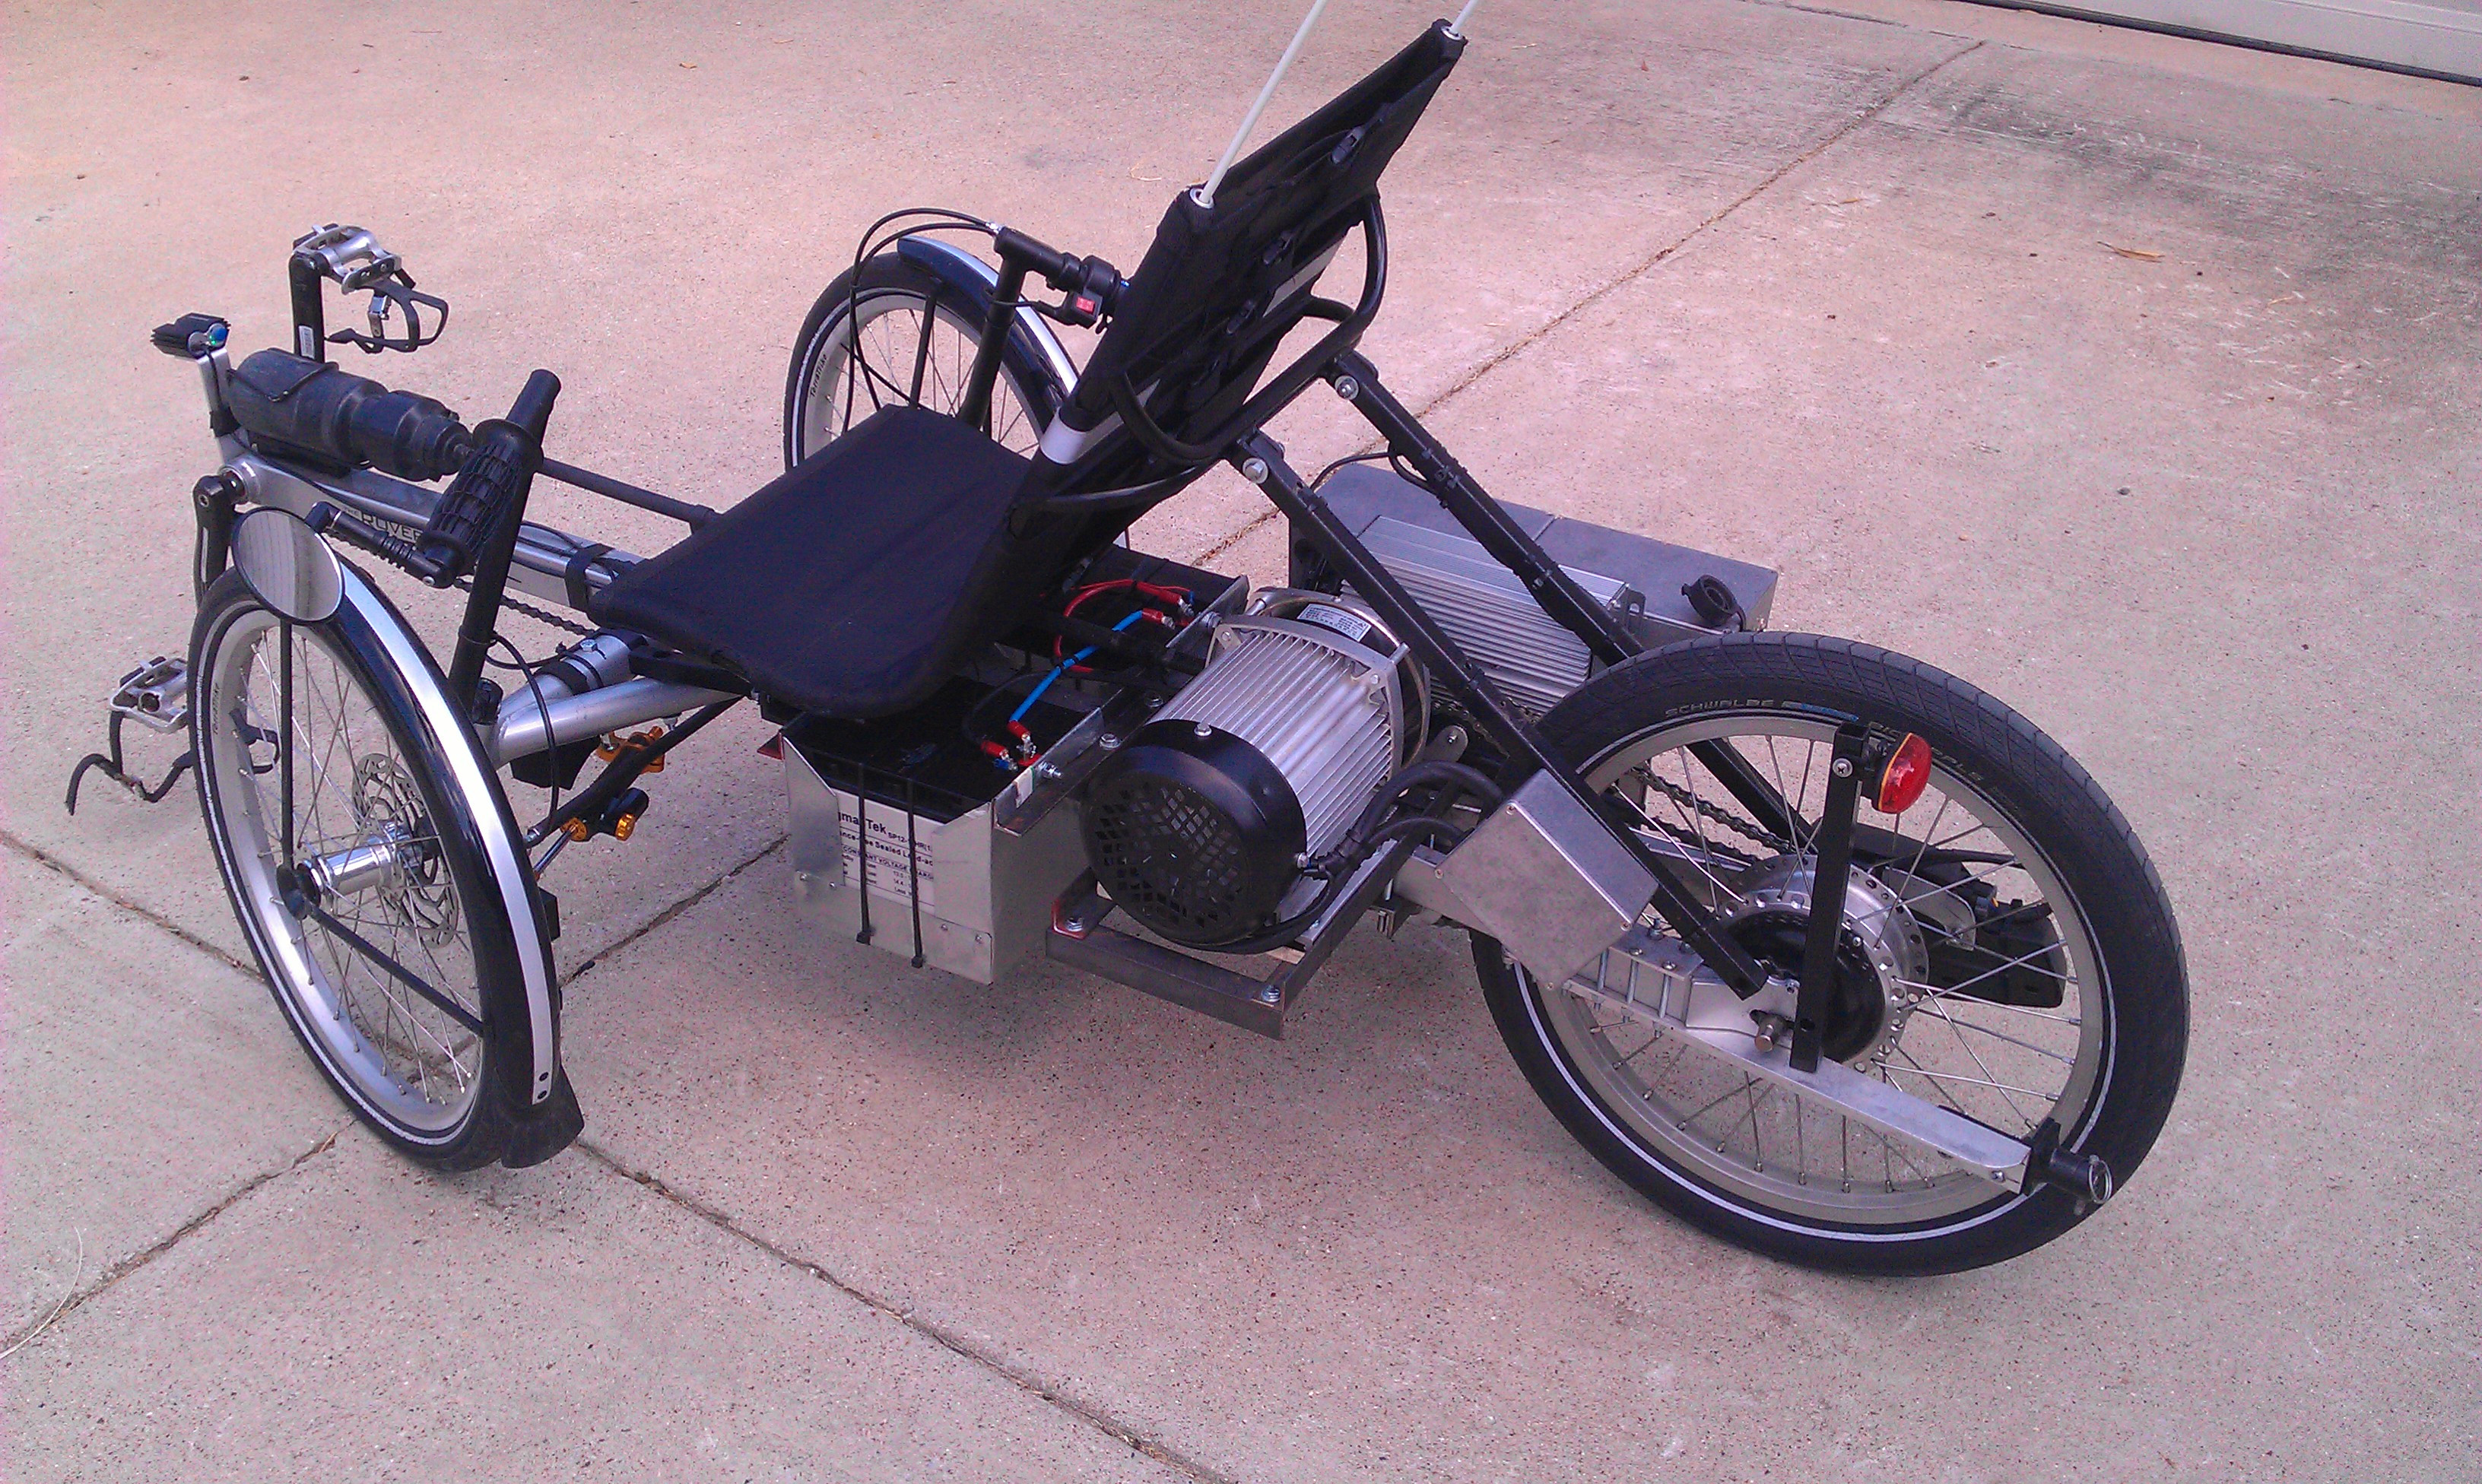 Best ideas about DIY Trike Kit
. Save or Pin beautiful DIY electric trike UU MOTOR FORUM Now.